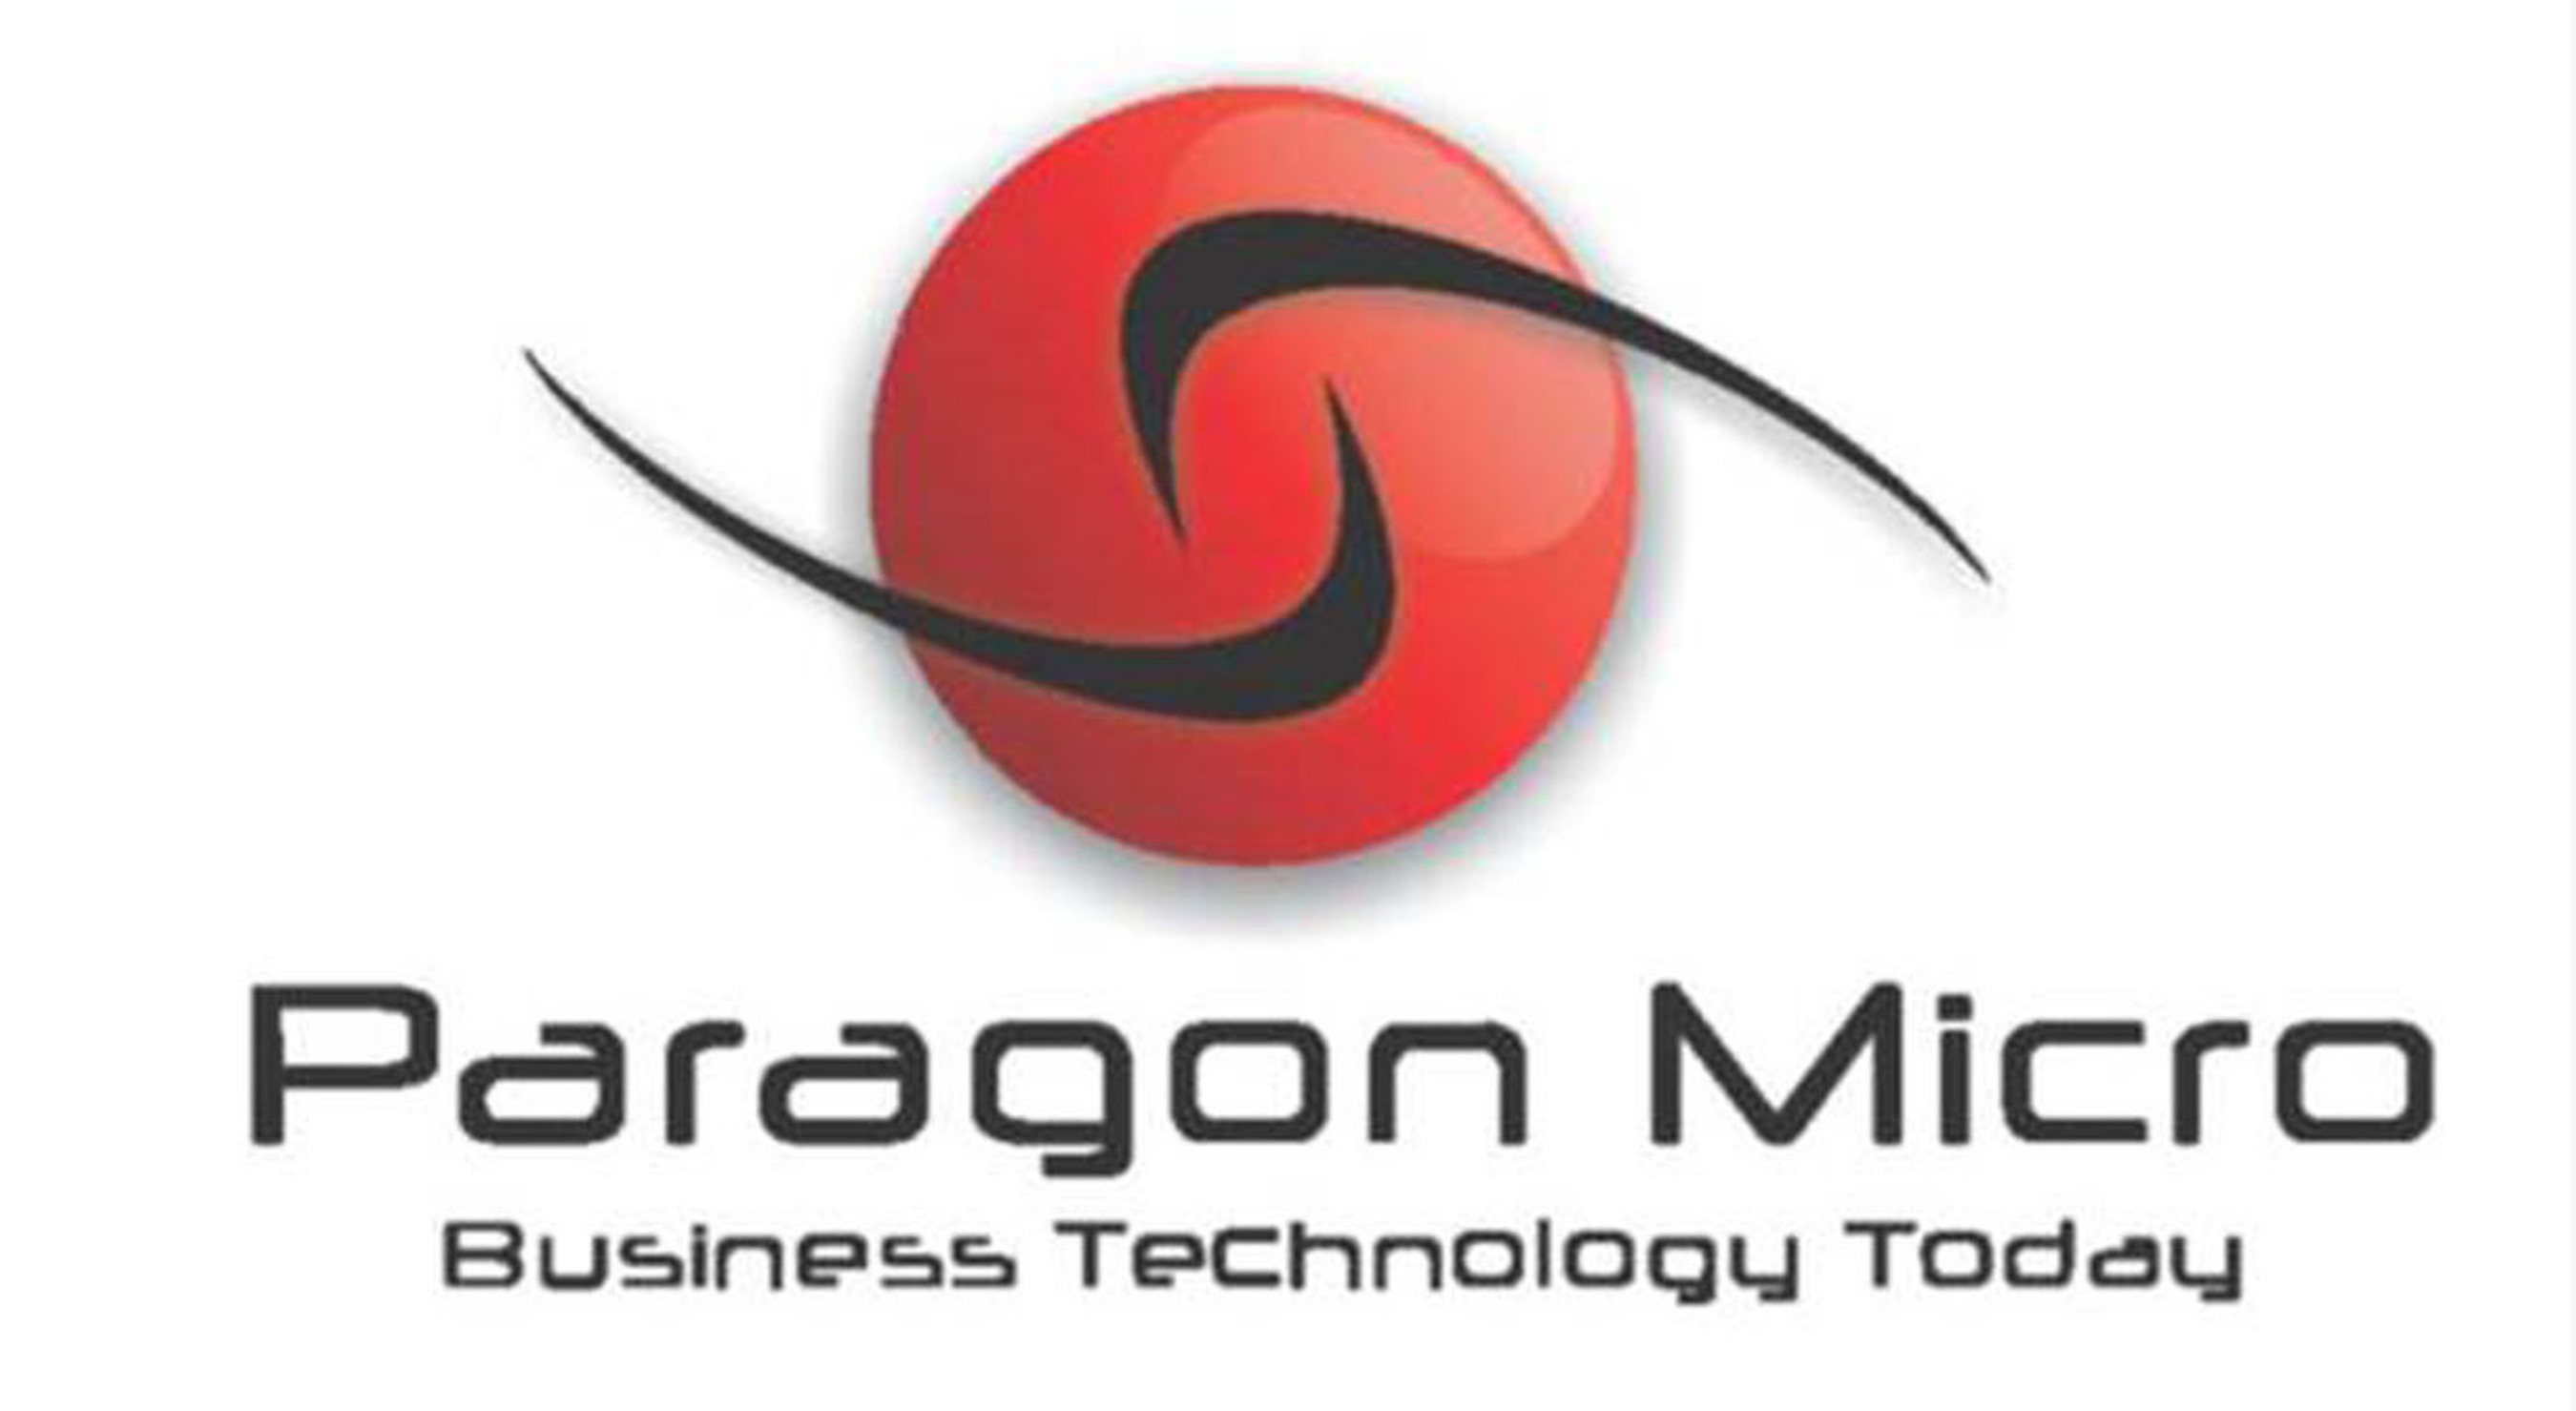 Paragon Micro, Inc. Logo. (PRNewsFoto/Paragon Micro, Inc.) (PRNewsFoto/)